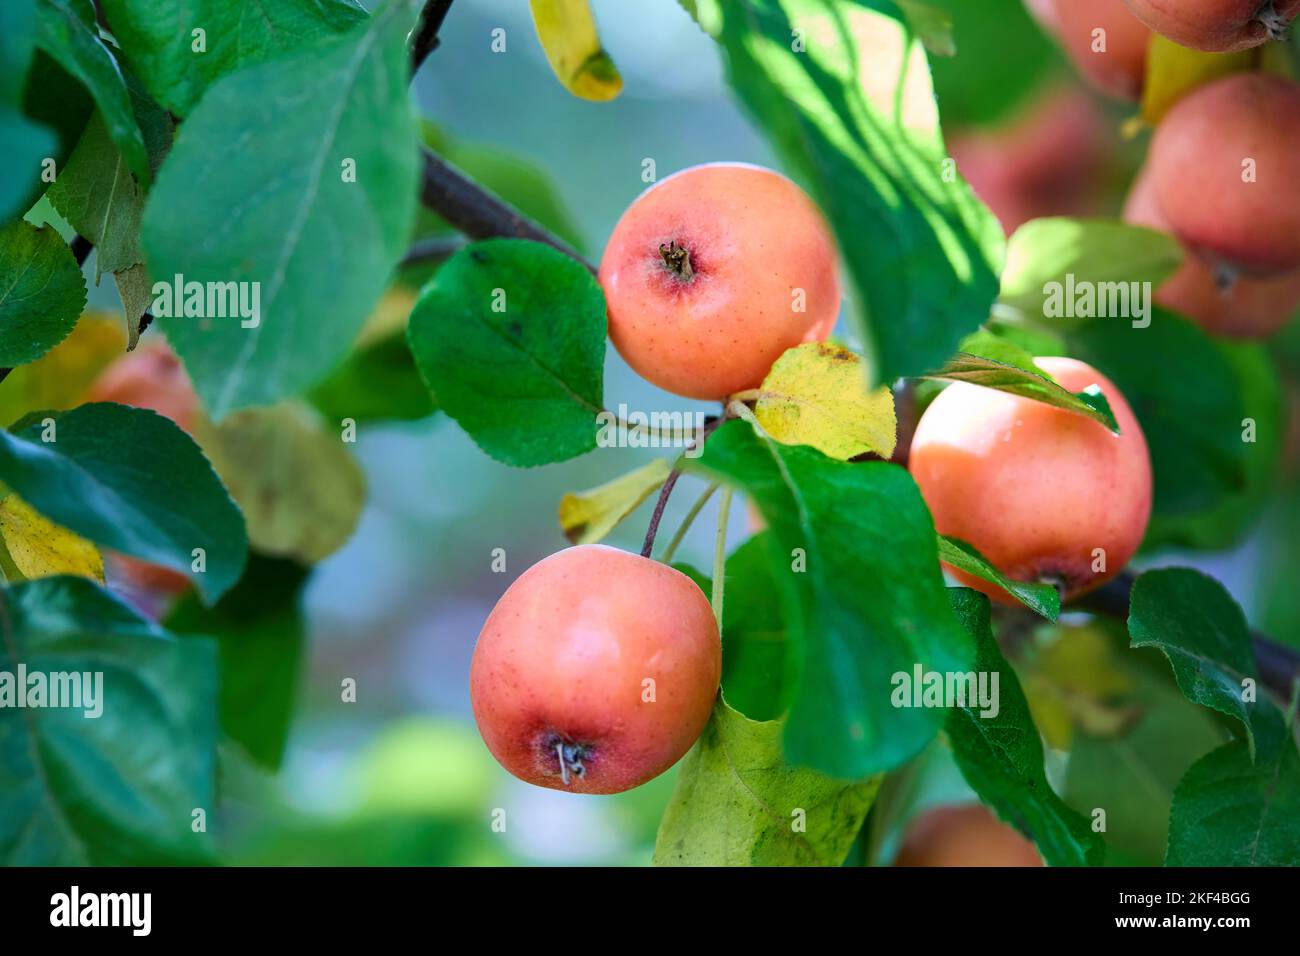 Malus prunifolia species of crabapple tree known as plum leaf crabapple, plum leaved apple, pear leaf crabapple, Chinese apple and Chinese crabapple Stock Photo